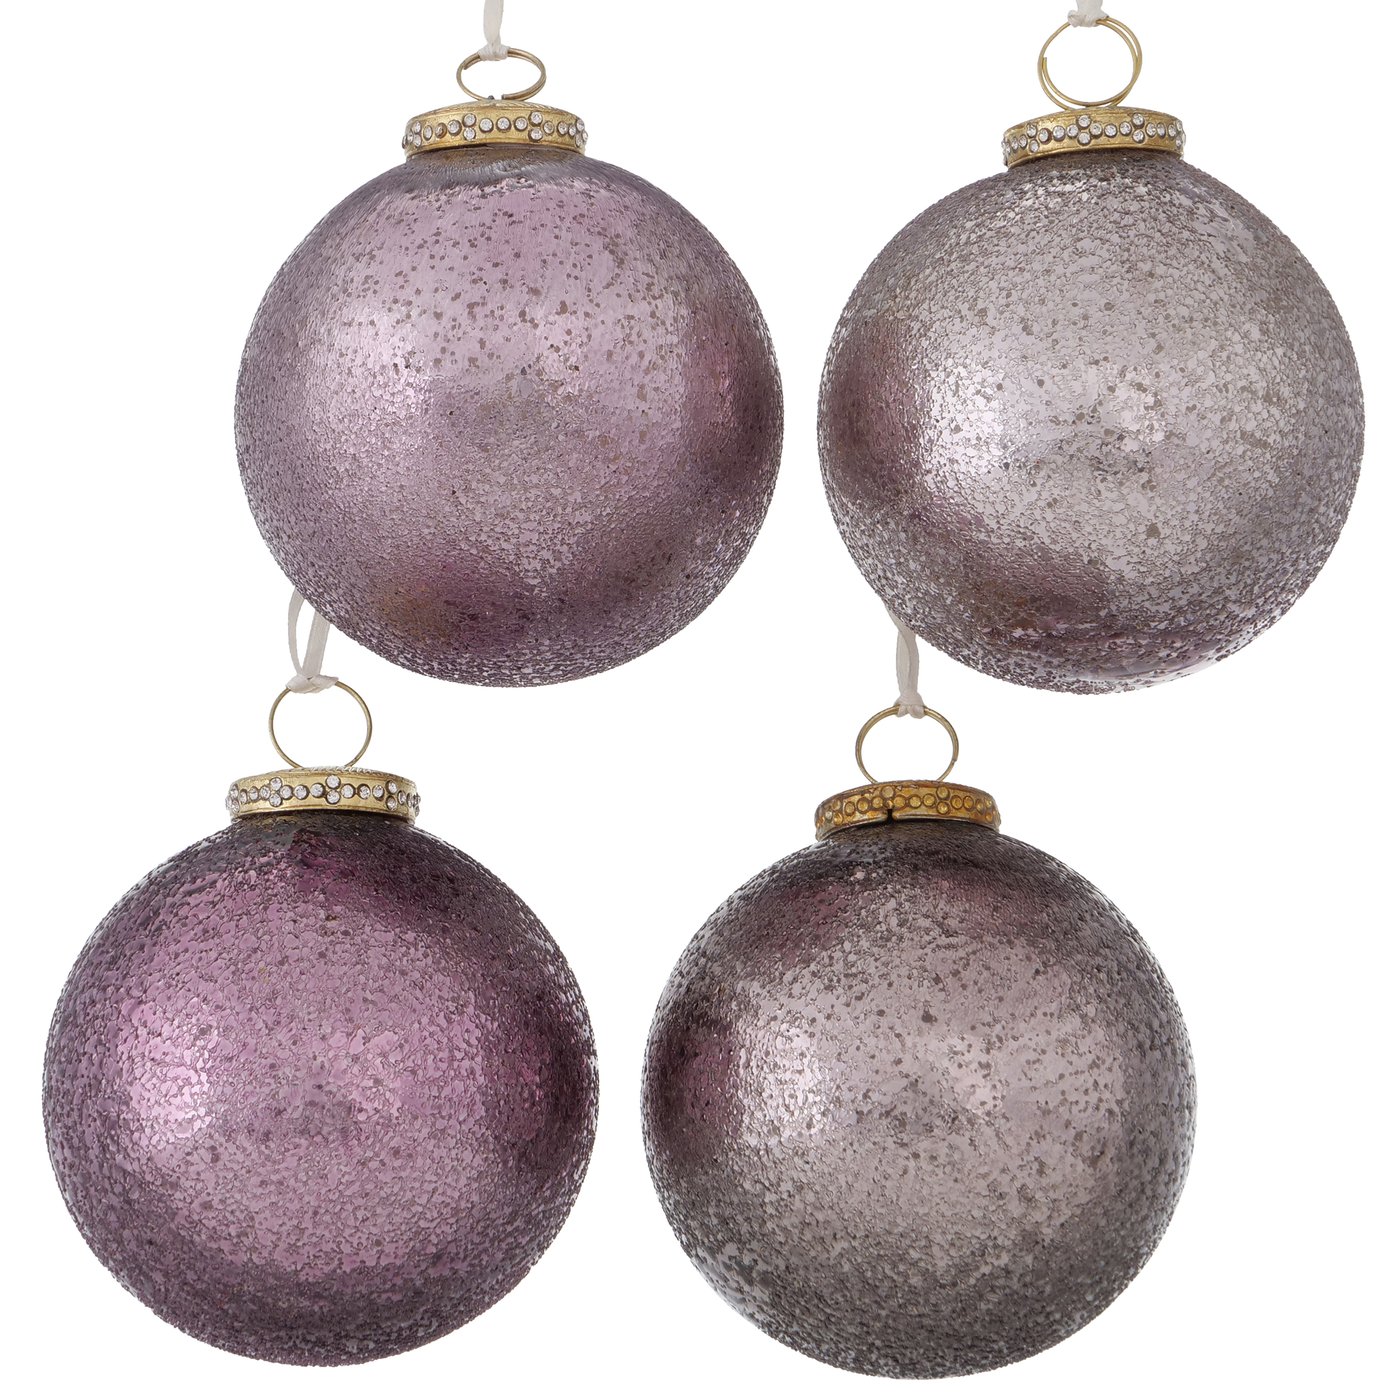 Edle Glas Weihnachtskugel "Bergaloti," rosa gold 4er Set - D10cm, 2013487, 4020607910683, Boltze